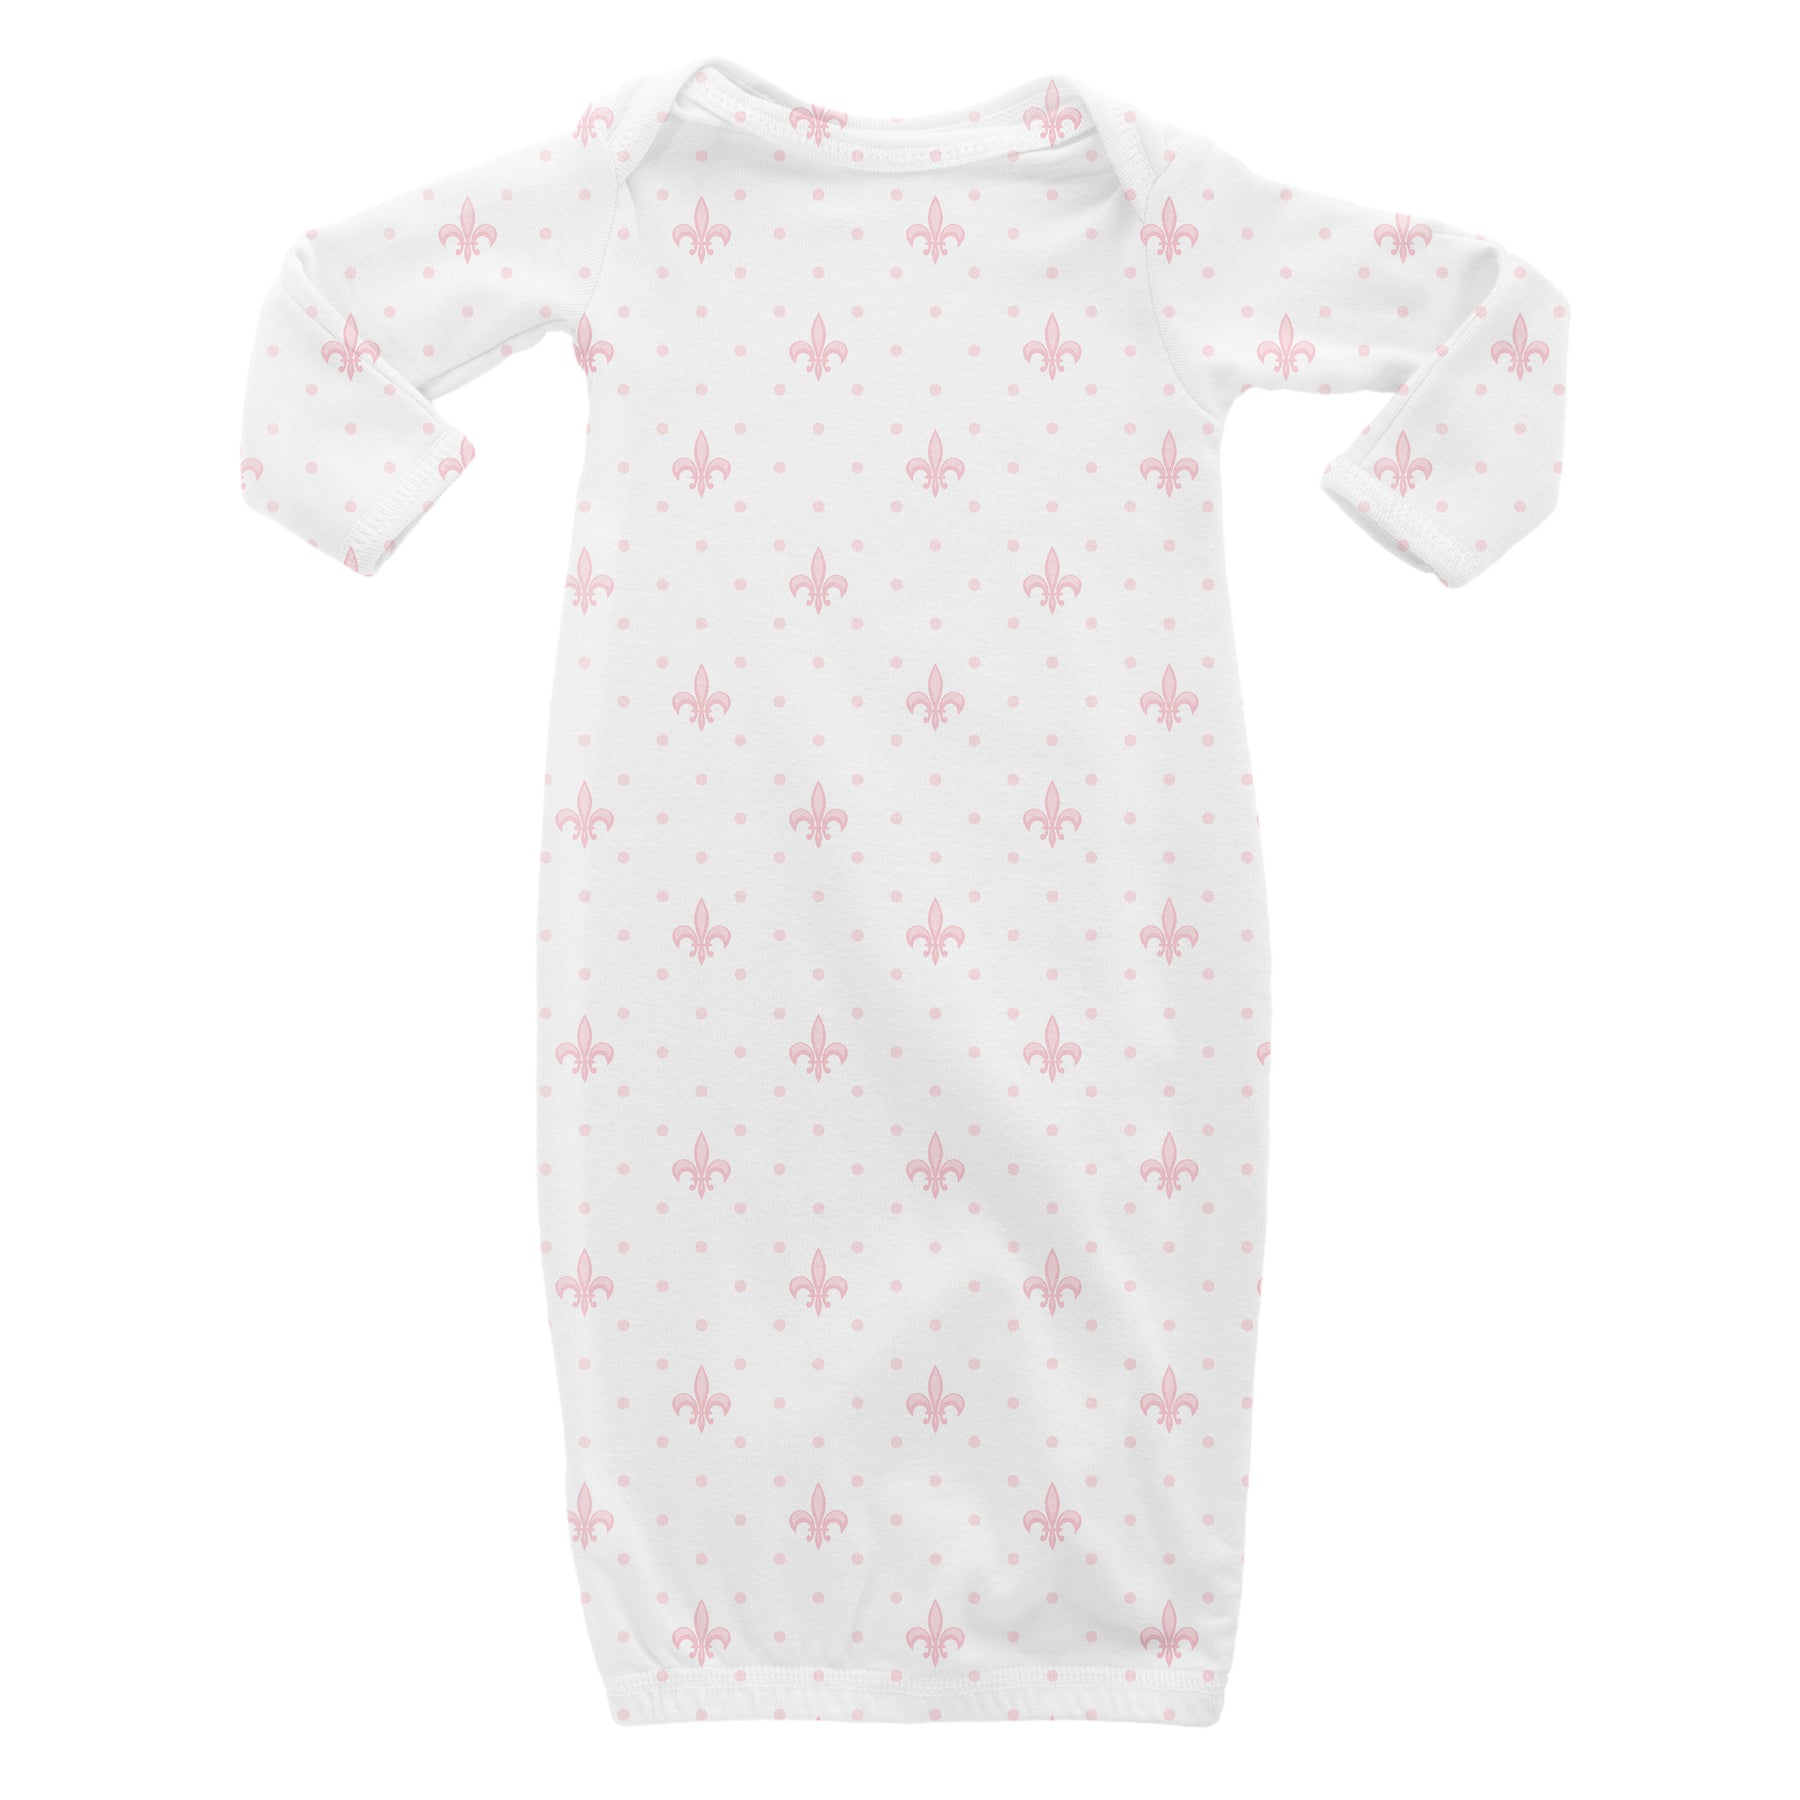 Fleur de Lis Newborn Gown : Baby Pink - Aspen Lane 